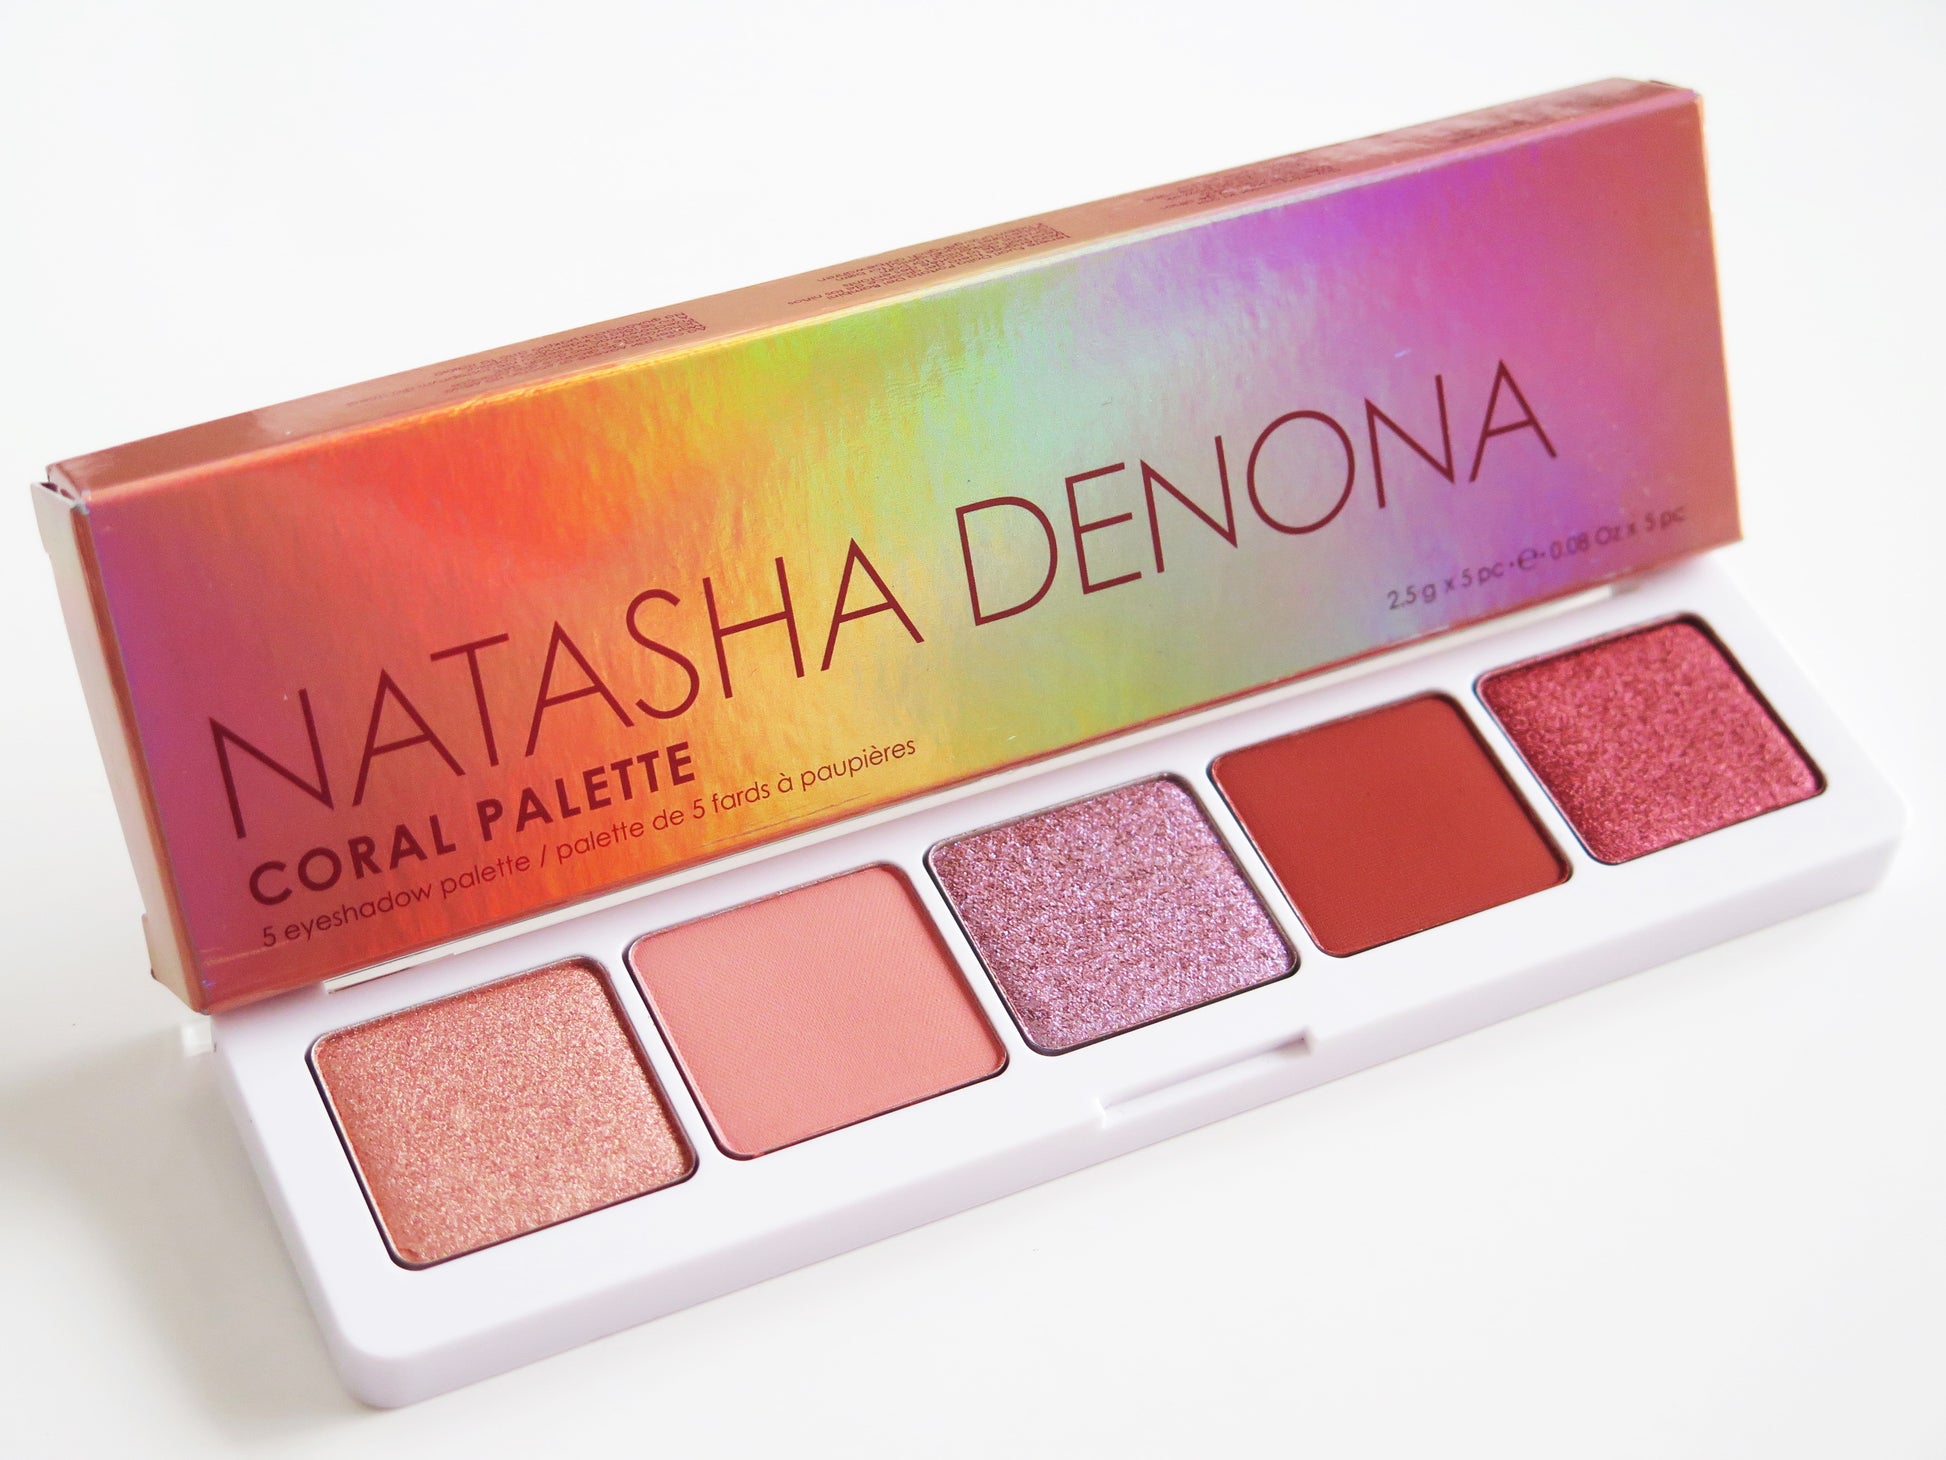 Natasha Denona Coral Eyeshadow Palette